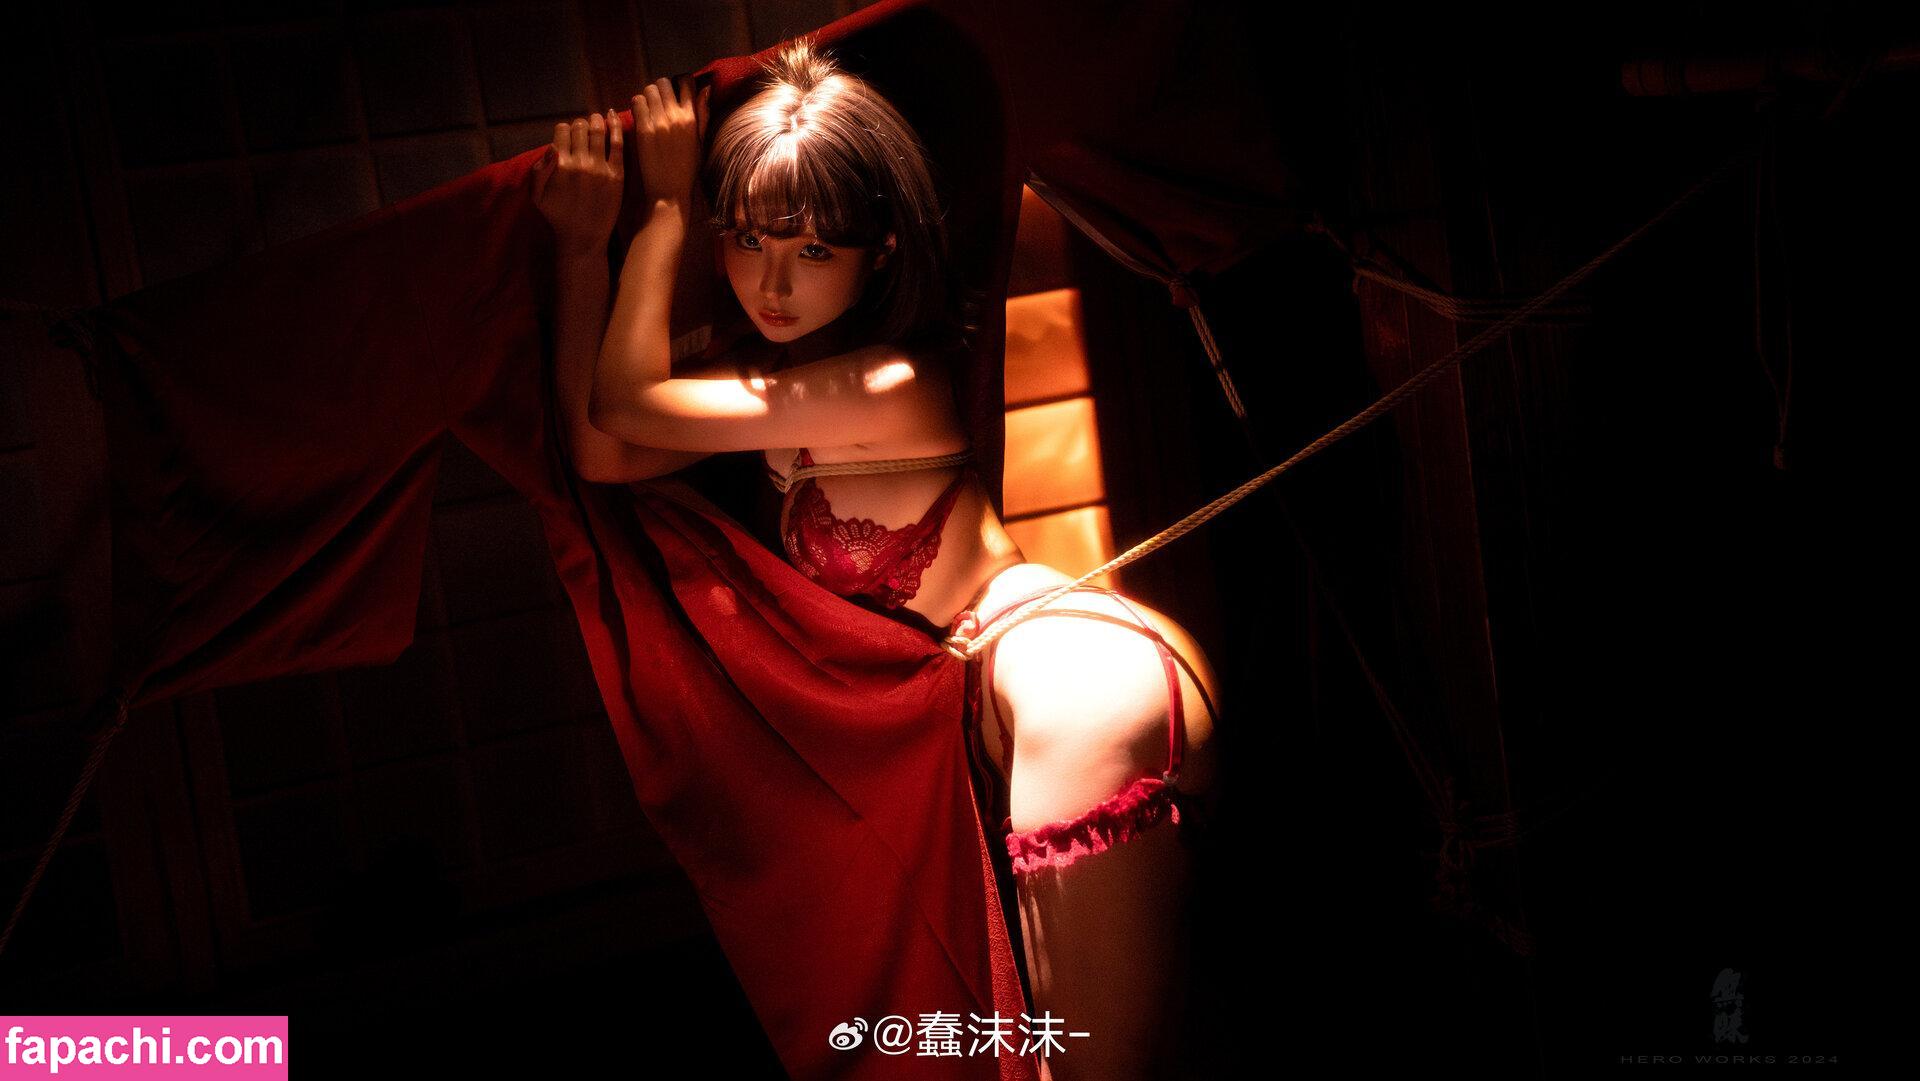 Chunmomo / chunmomo0127 / chunmomo_ / shunli__mei / 蠢沫沫momo leaked nude photo #2010 from OnlyFans/Patreon